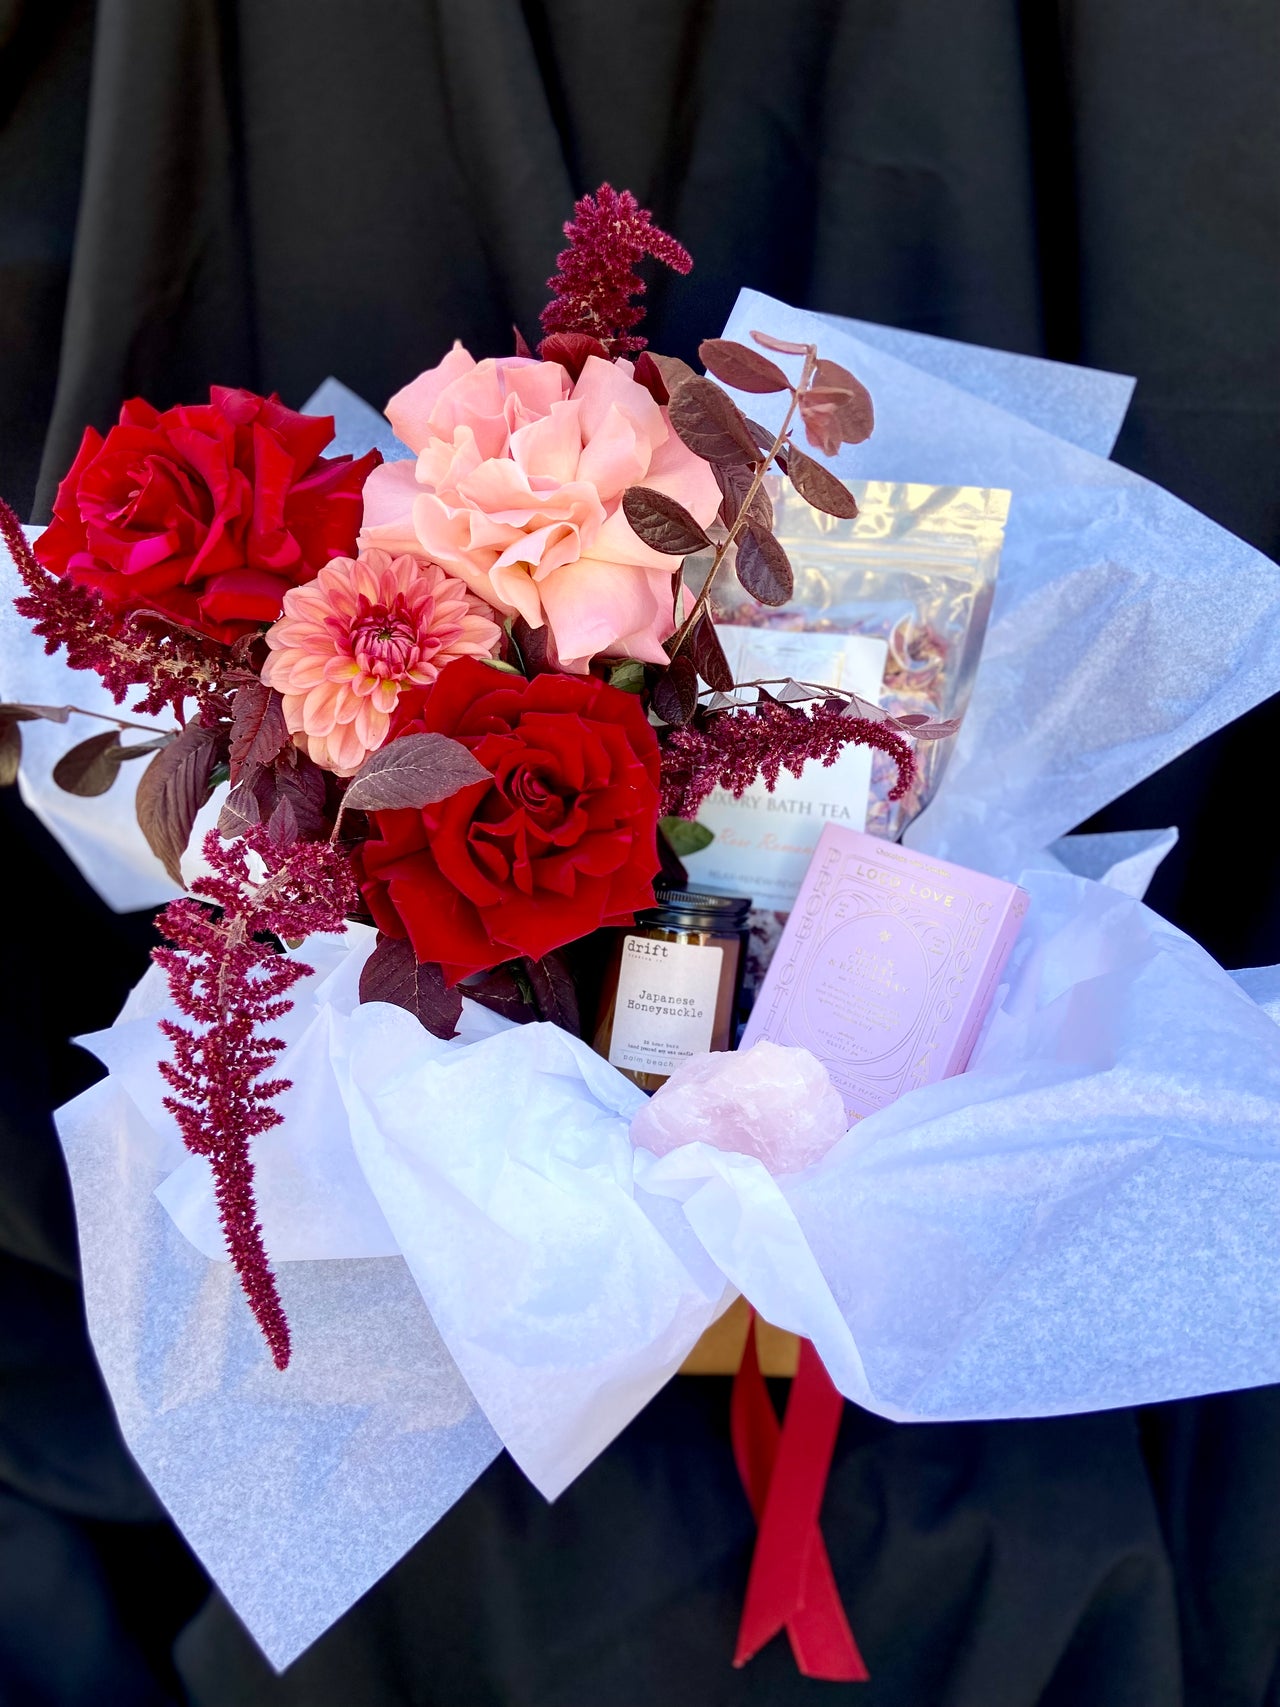 The Lovers - gift box No. 2 - Haven Botanical - Loco Love Chocolates - Drift and Co candle - Byron Bath Organics Rose Bath Tea